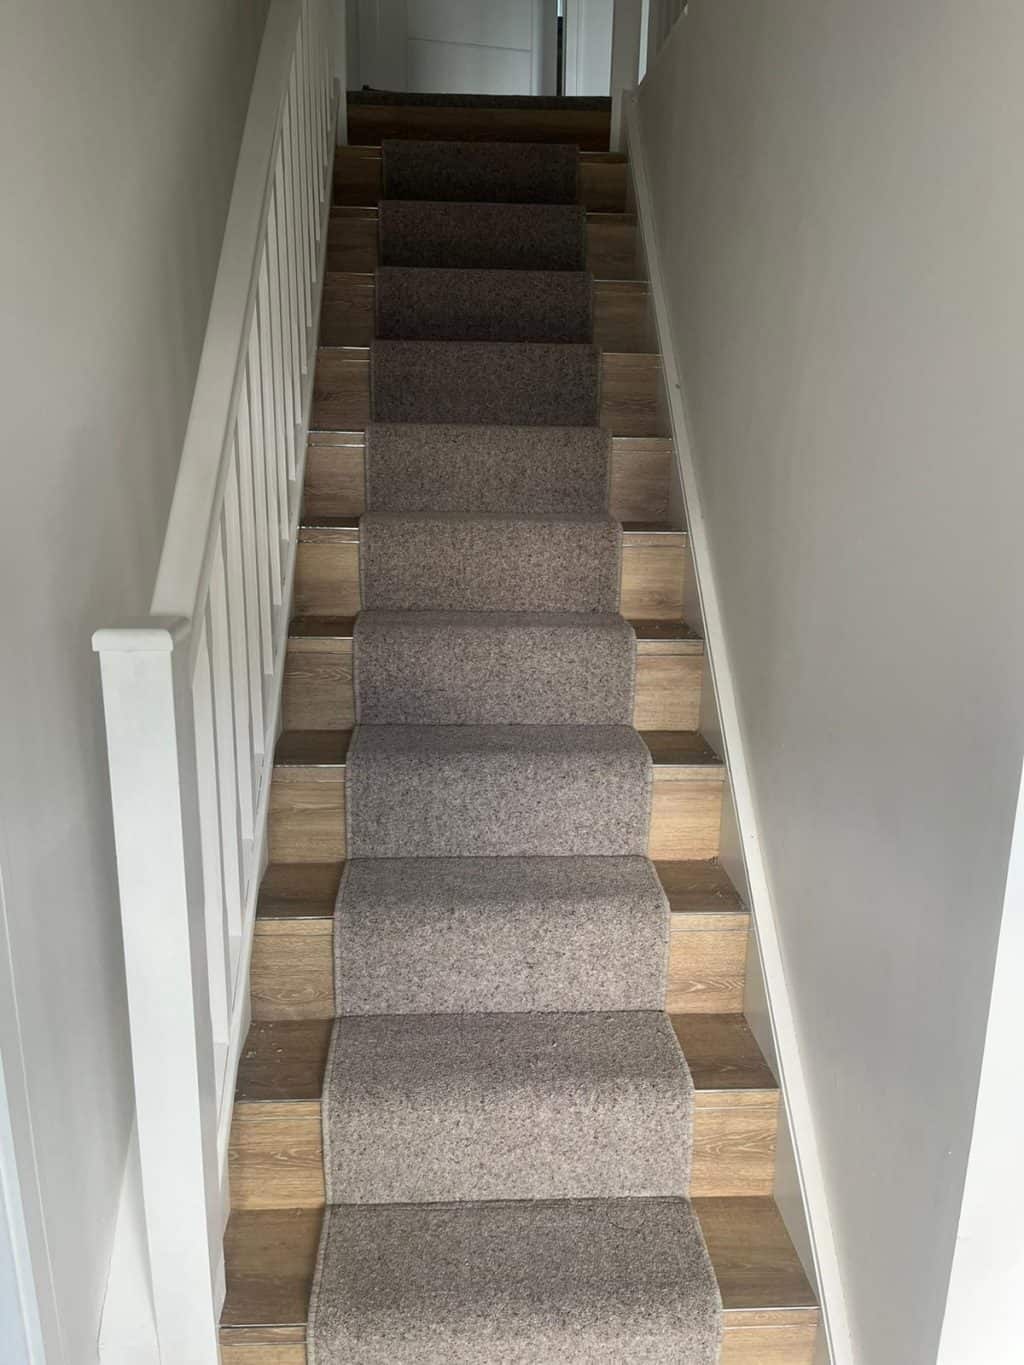 Stair Carpet Runner with Whipped Edges